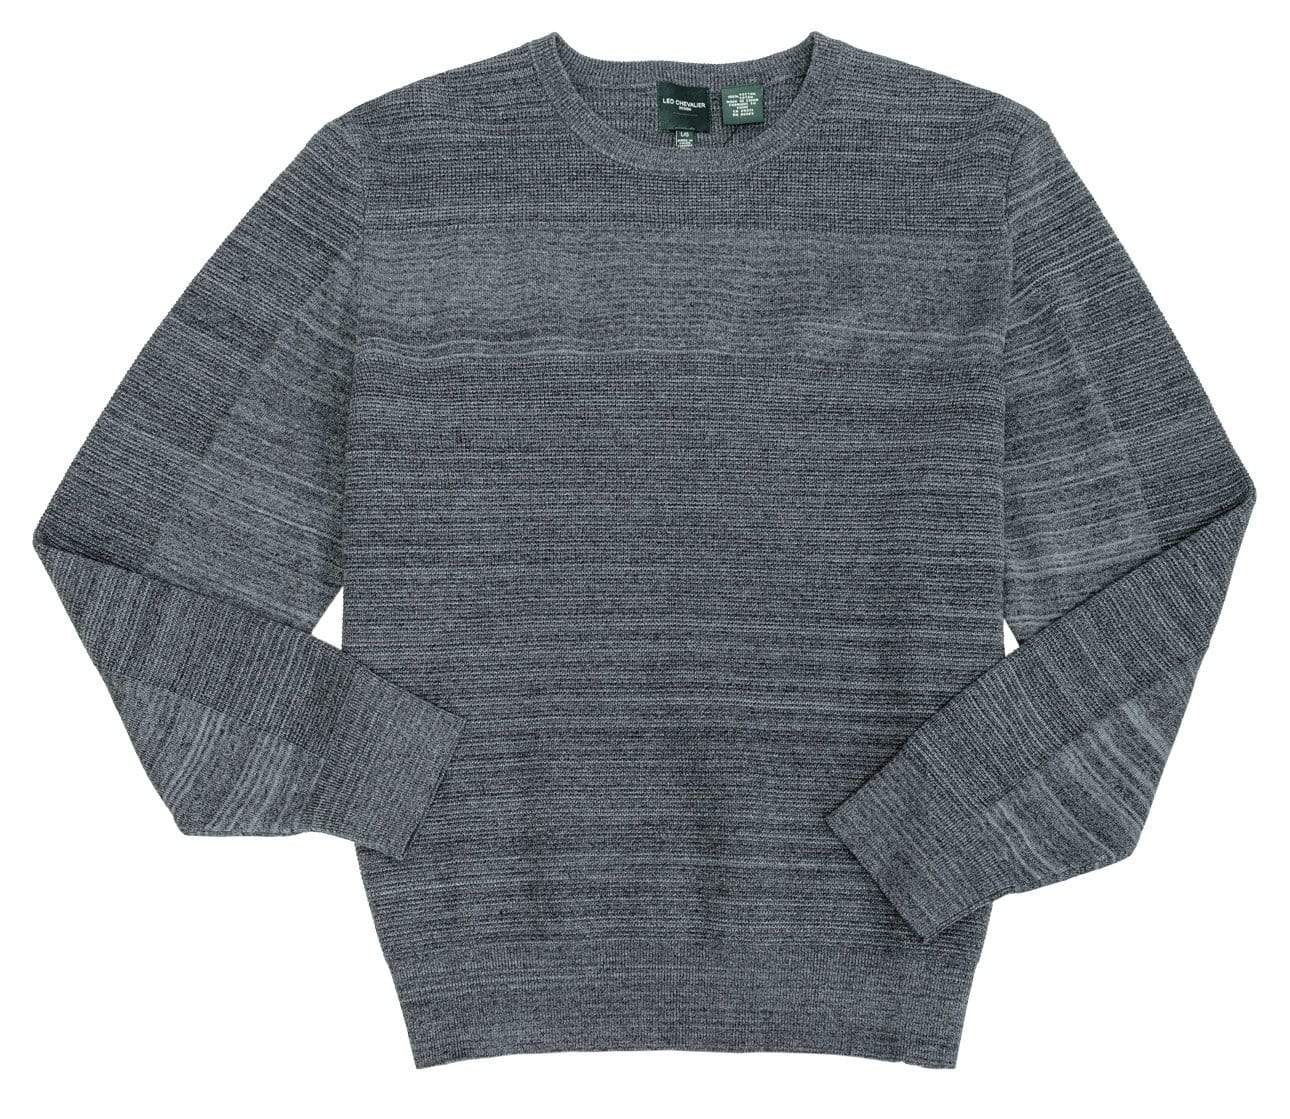 Leo Chevalier Design 100% Cotton Crewneck Sweater Available in 2-Colors